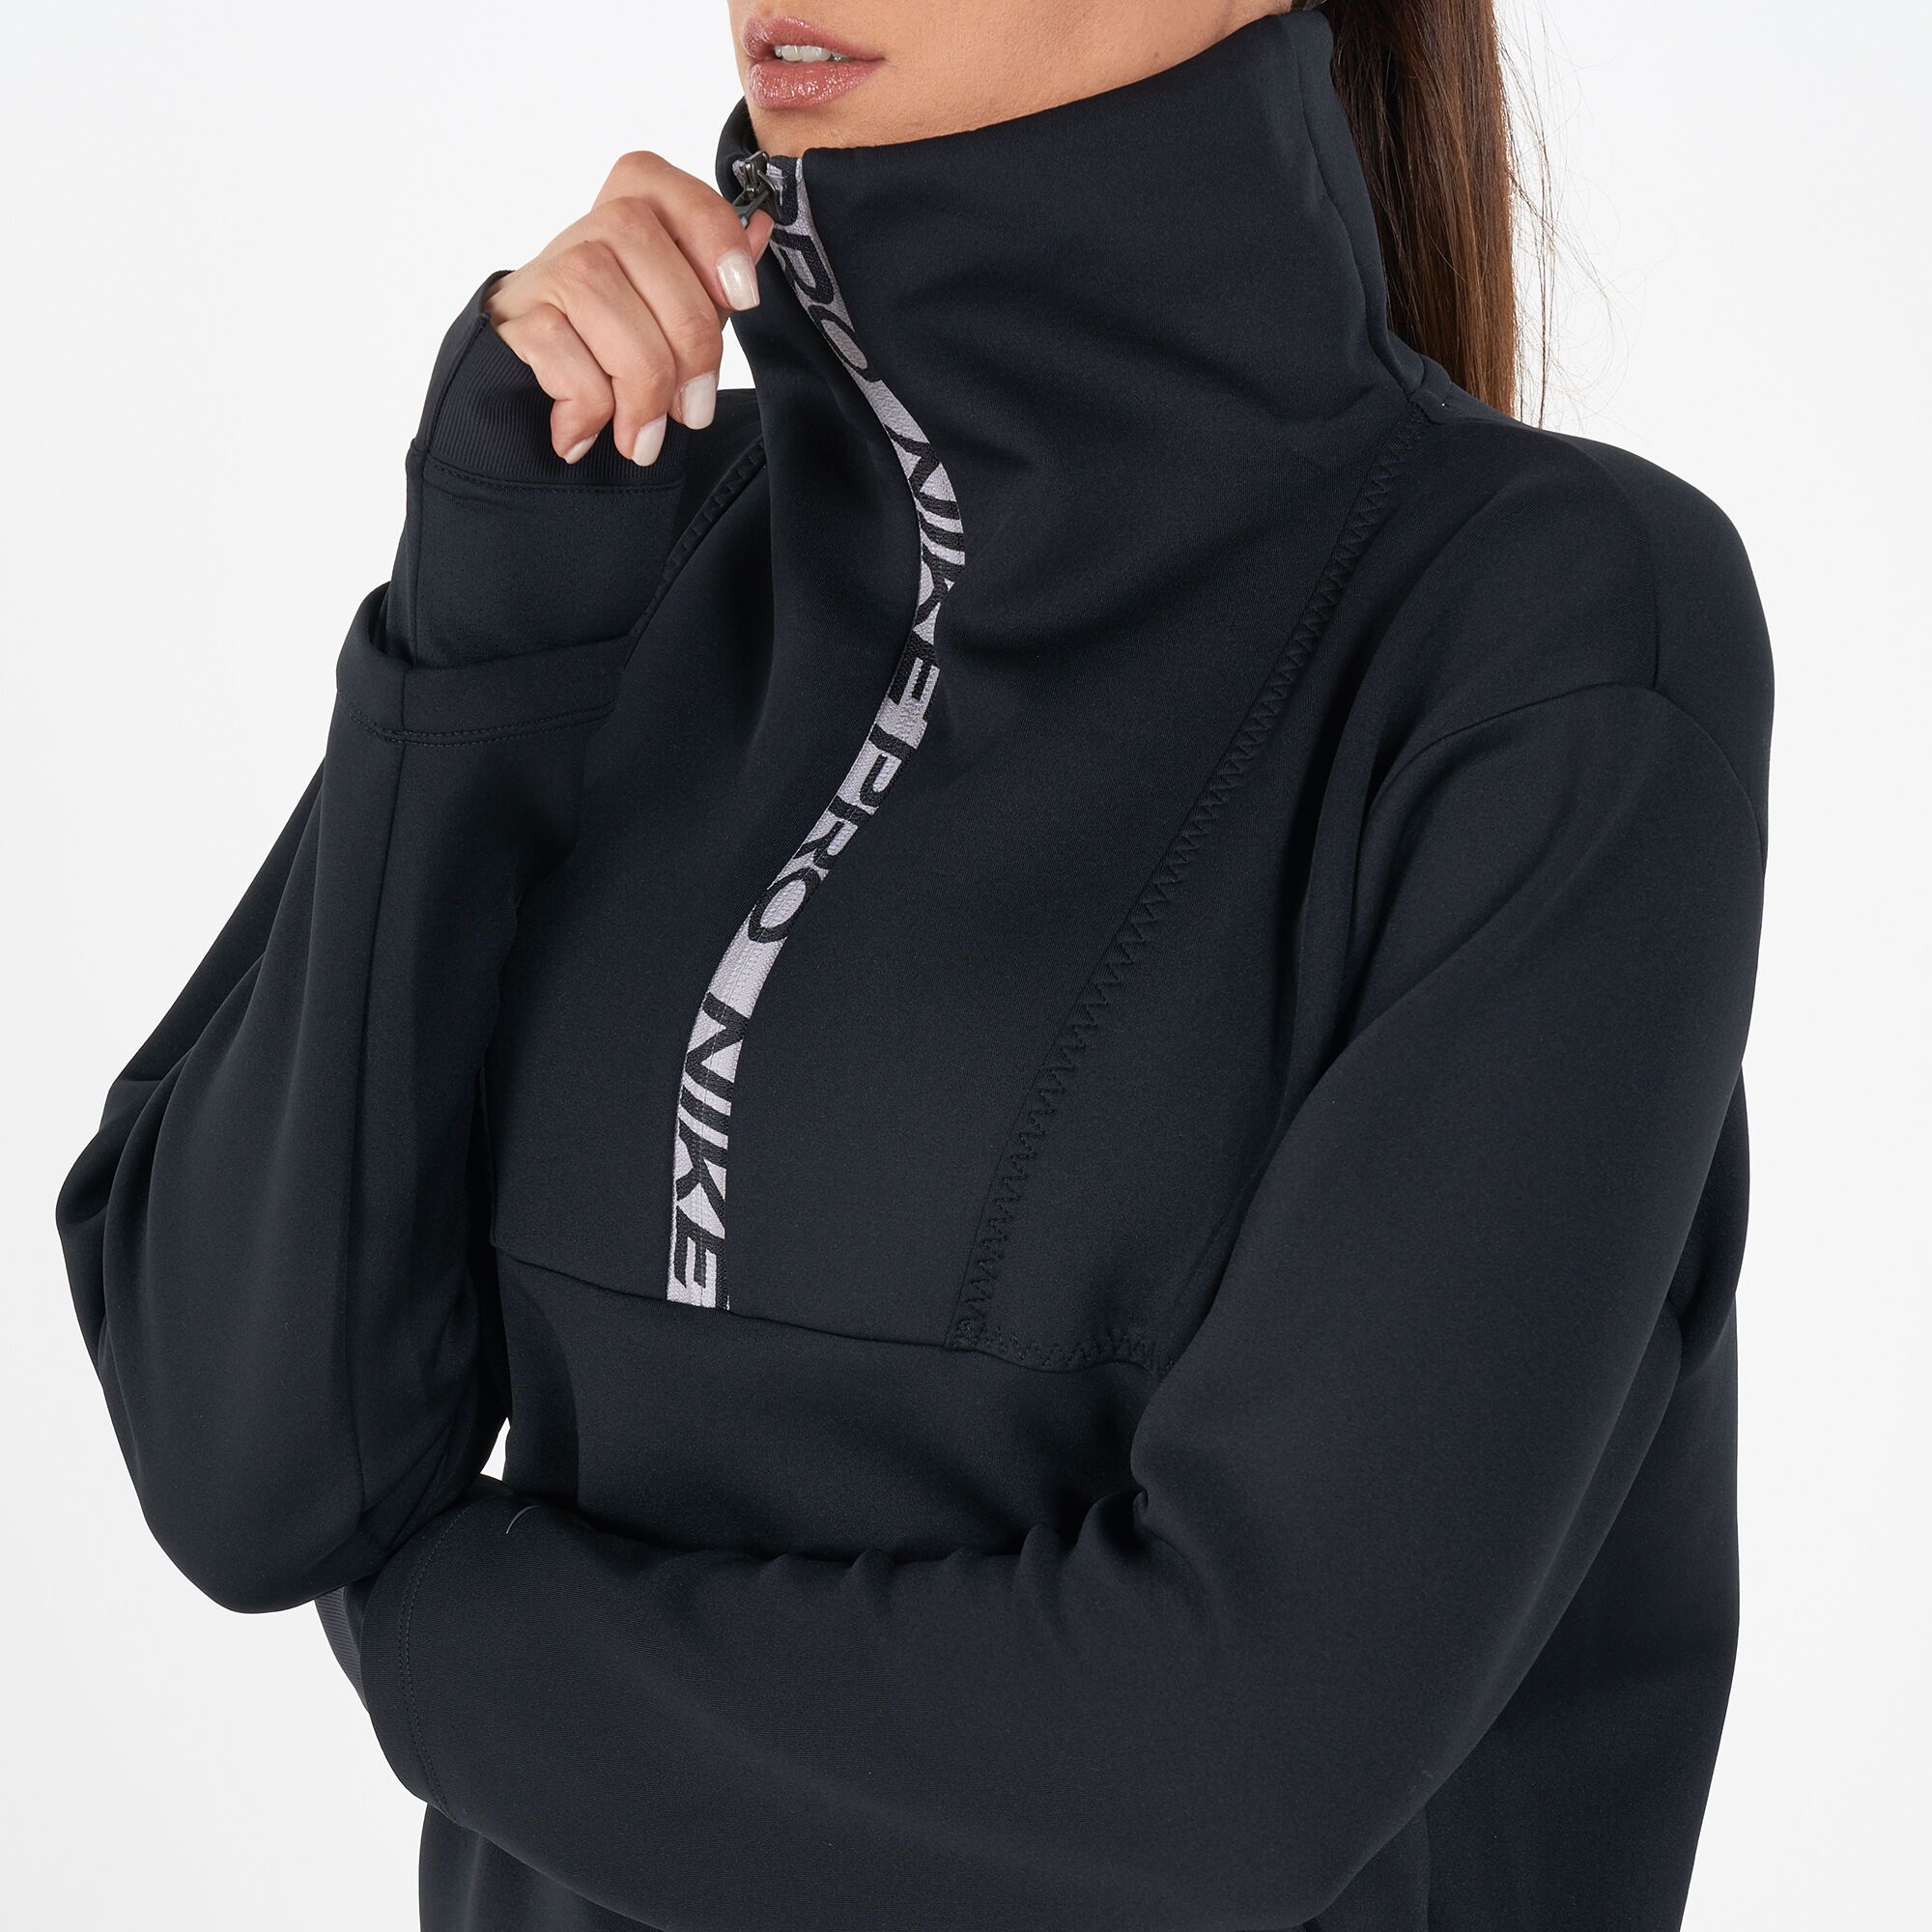 Buy Nike Women's Pro Fleece Long Sleeve 